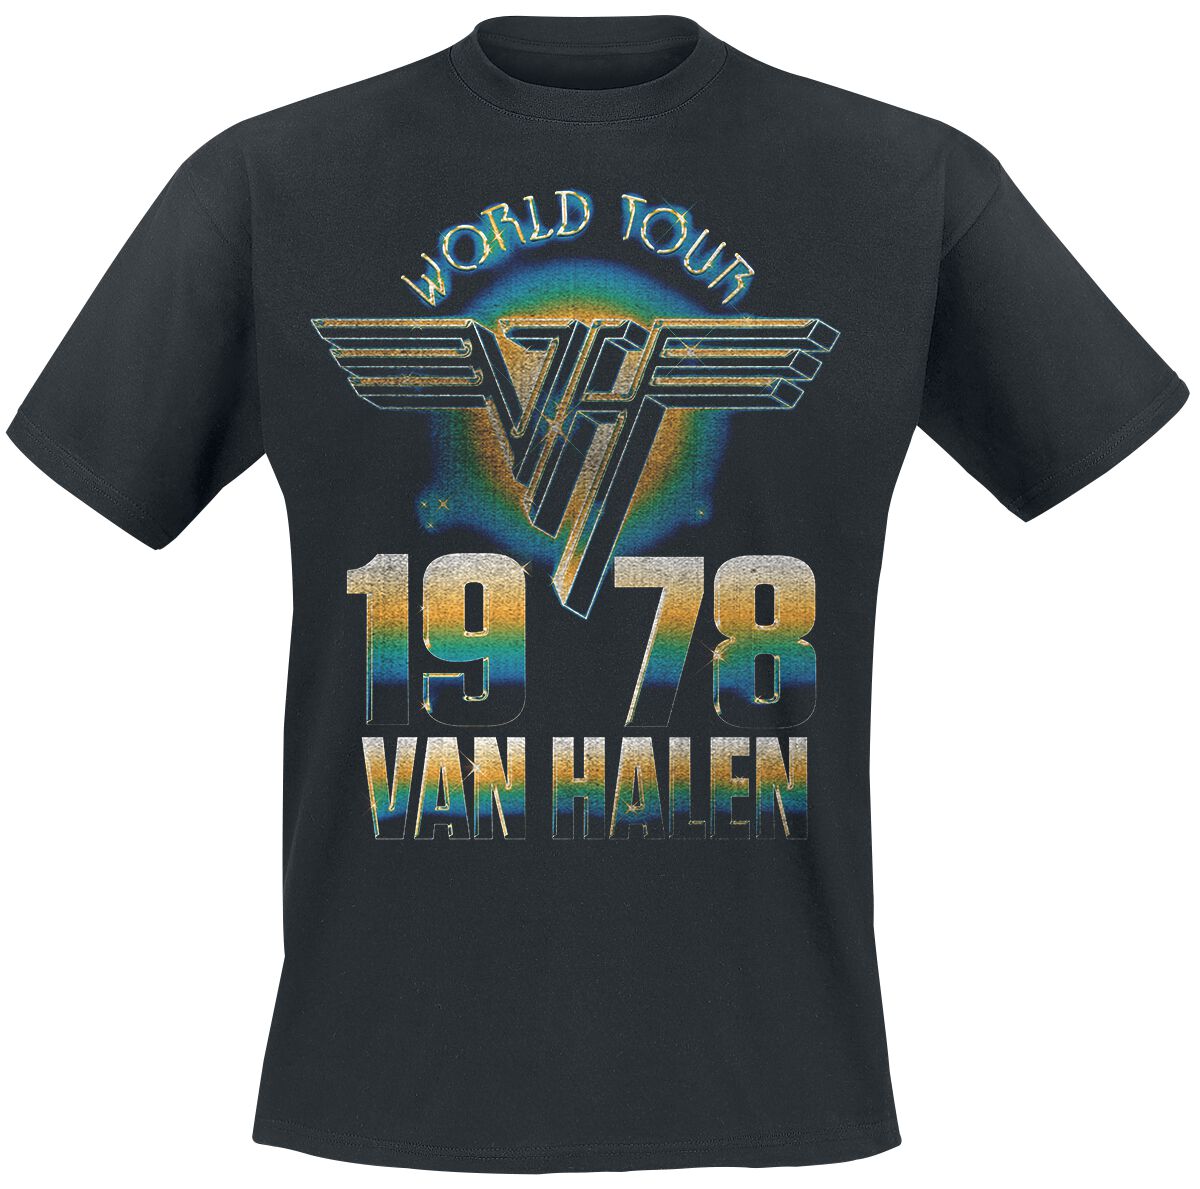 Van Halen World Tour '78 T-Shirt black